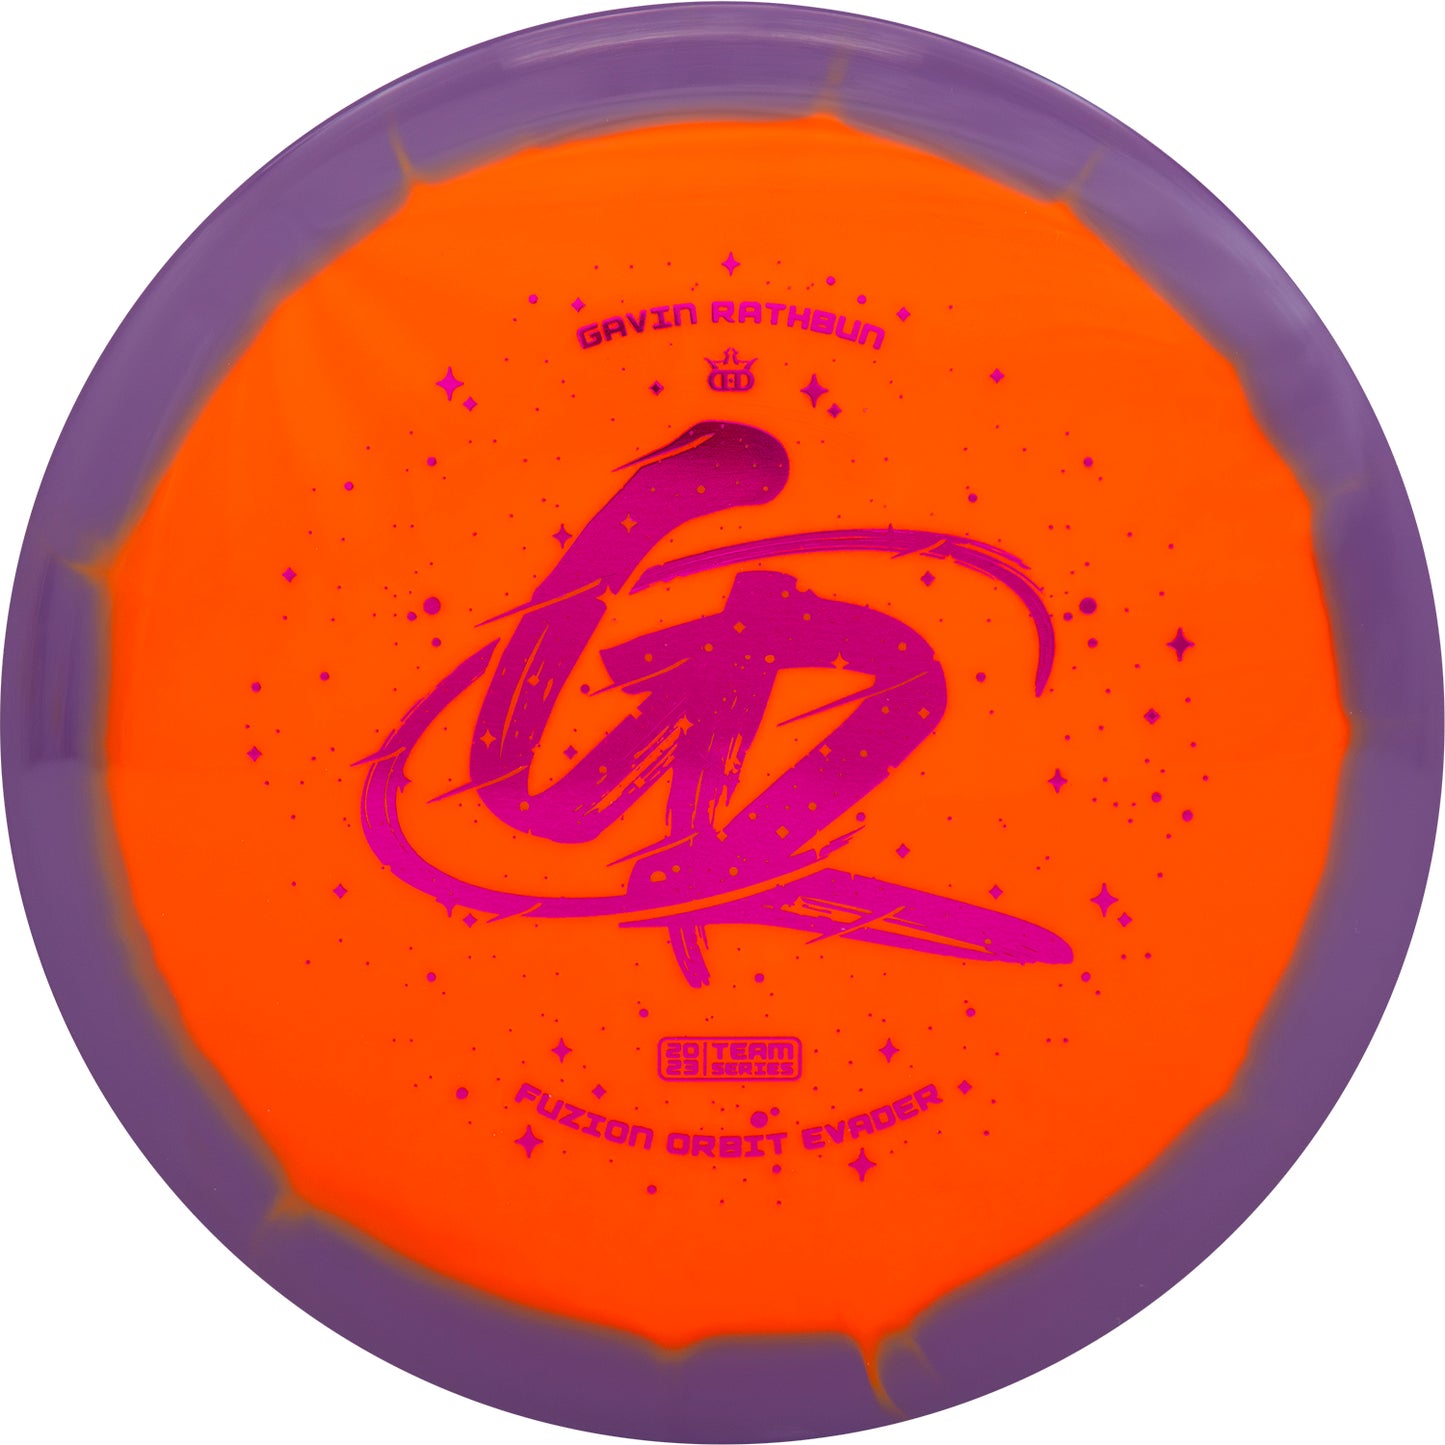 Dynamic Discs Fuzion Orbit Evader Gavin Rathbun Team Series 2023